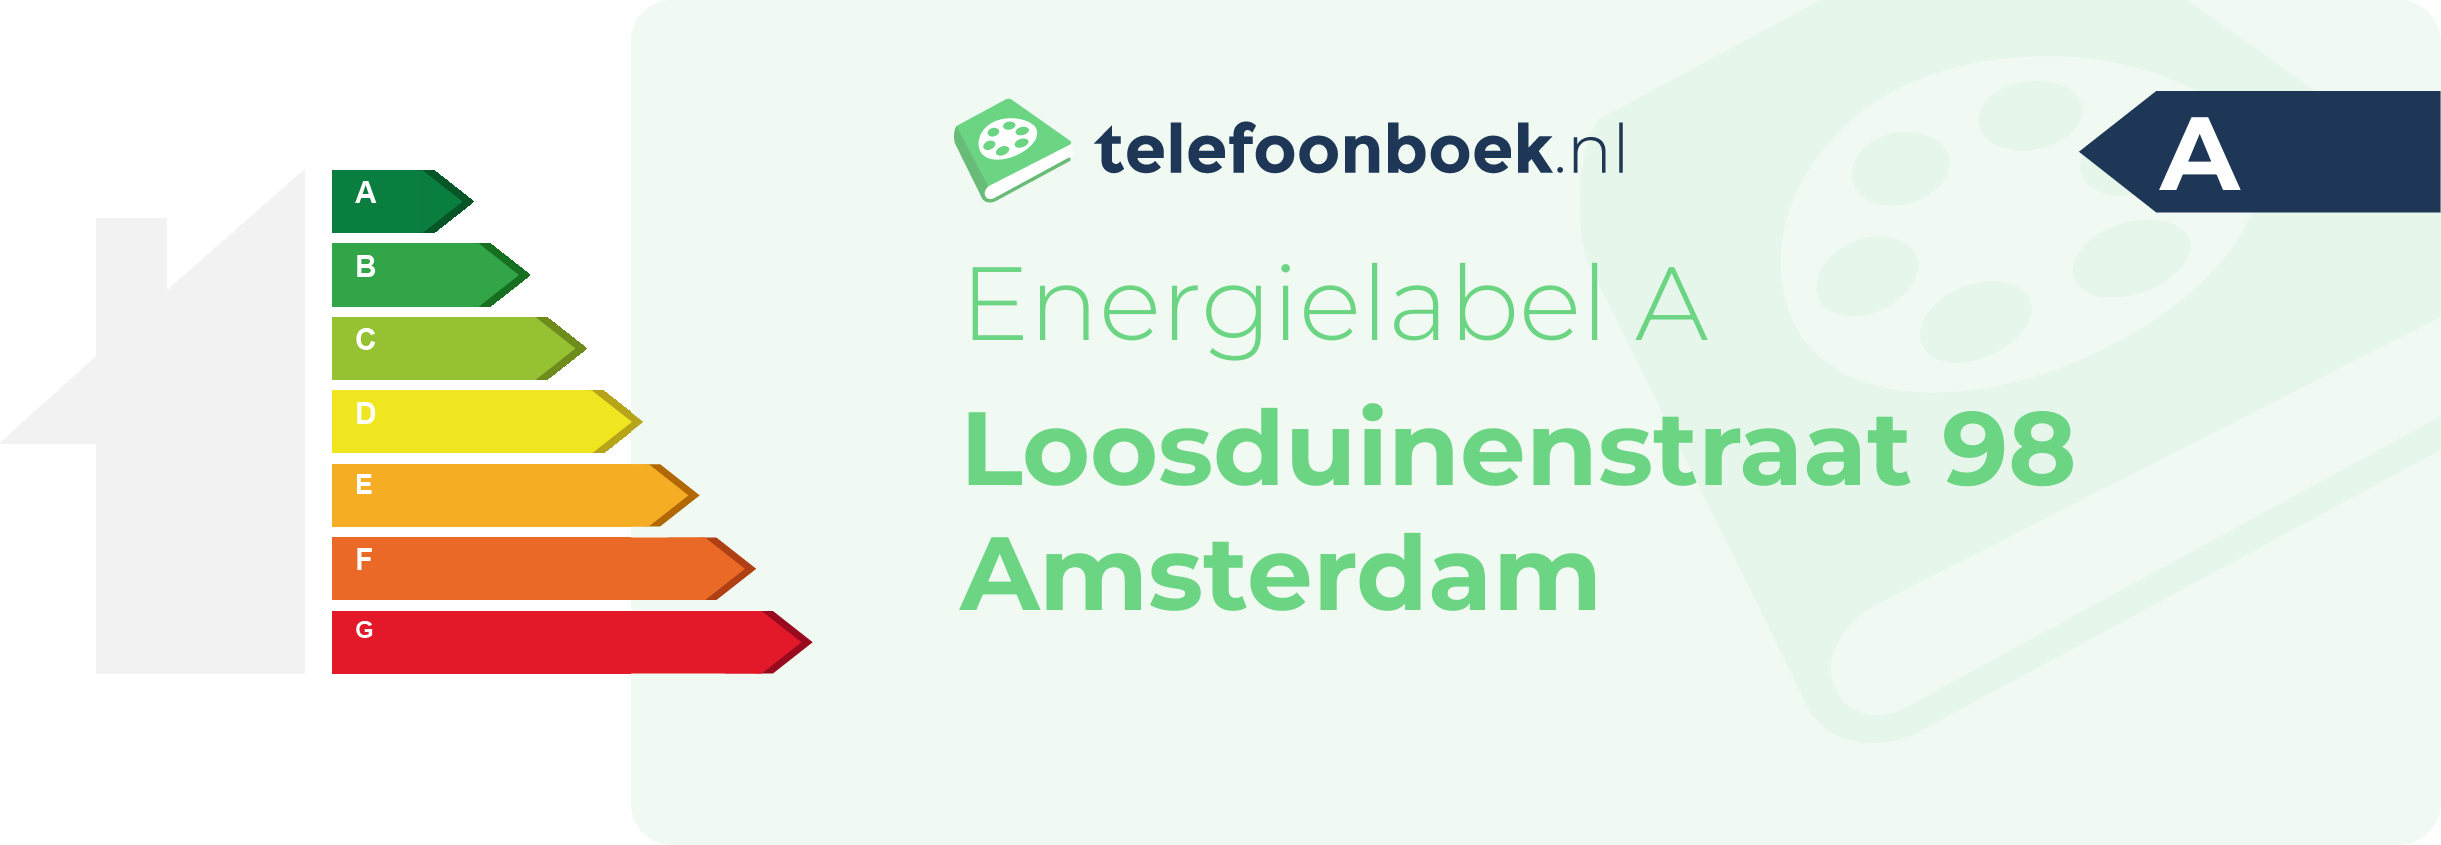 Energielabel Loosduinenstraat 98 Amsterdam